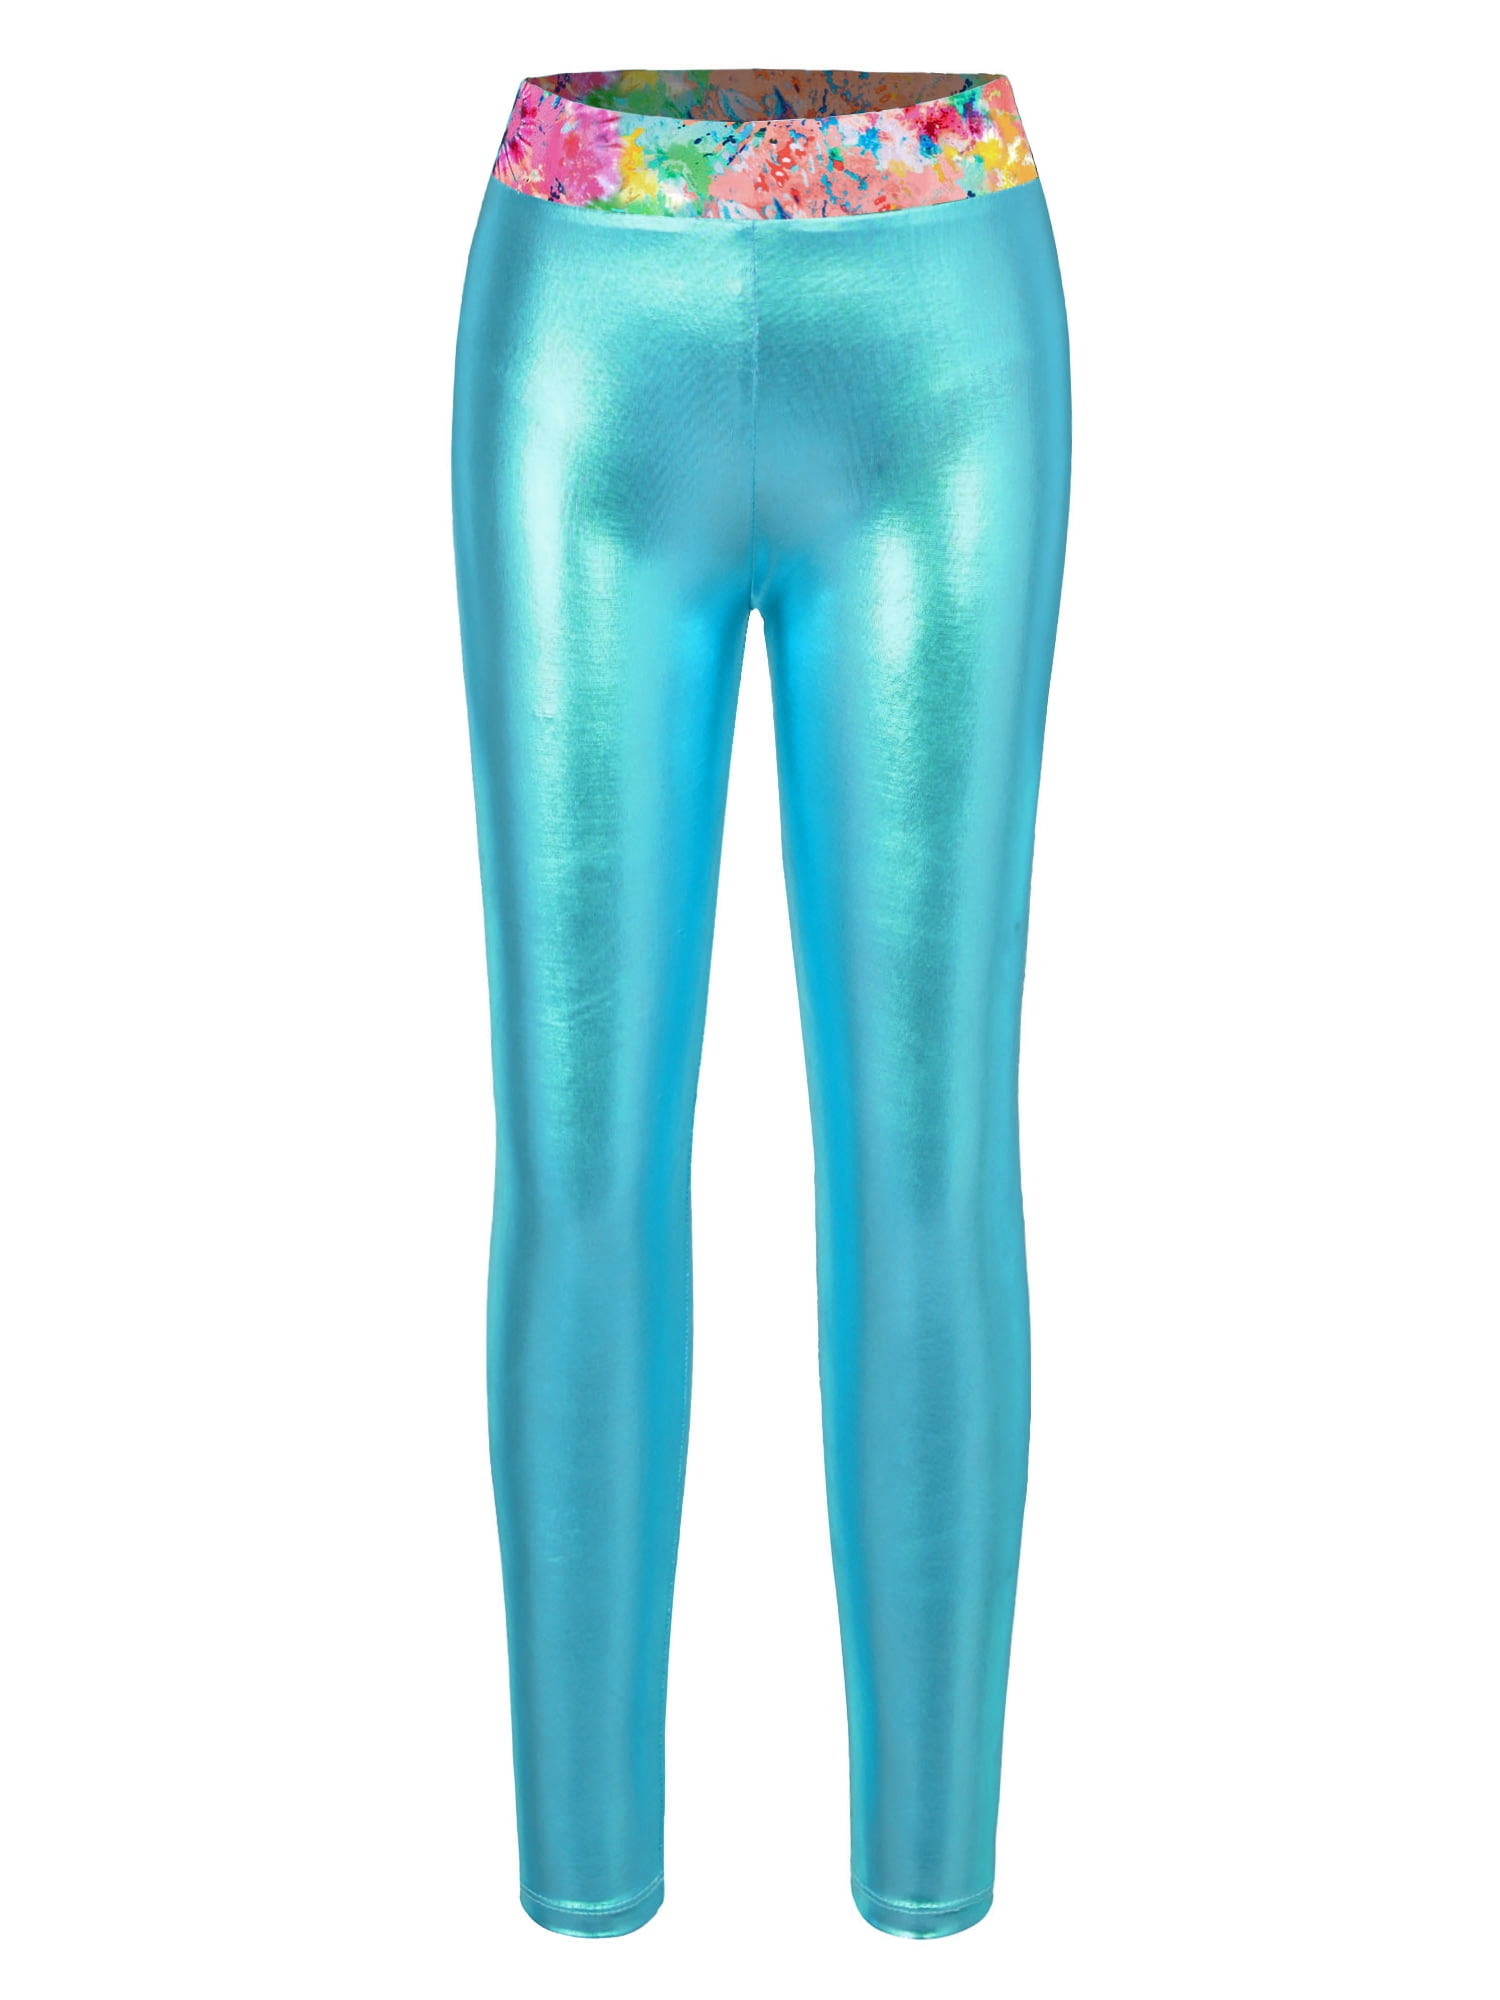 YONGHS Women's Metallic Yoga Pants High Shiny Oil Sports Leggings